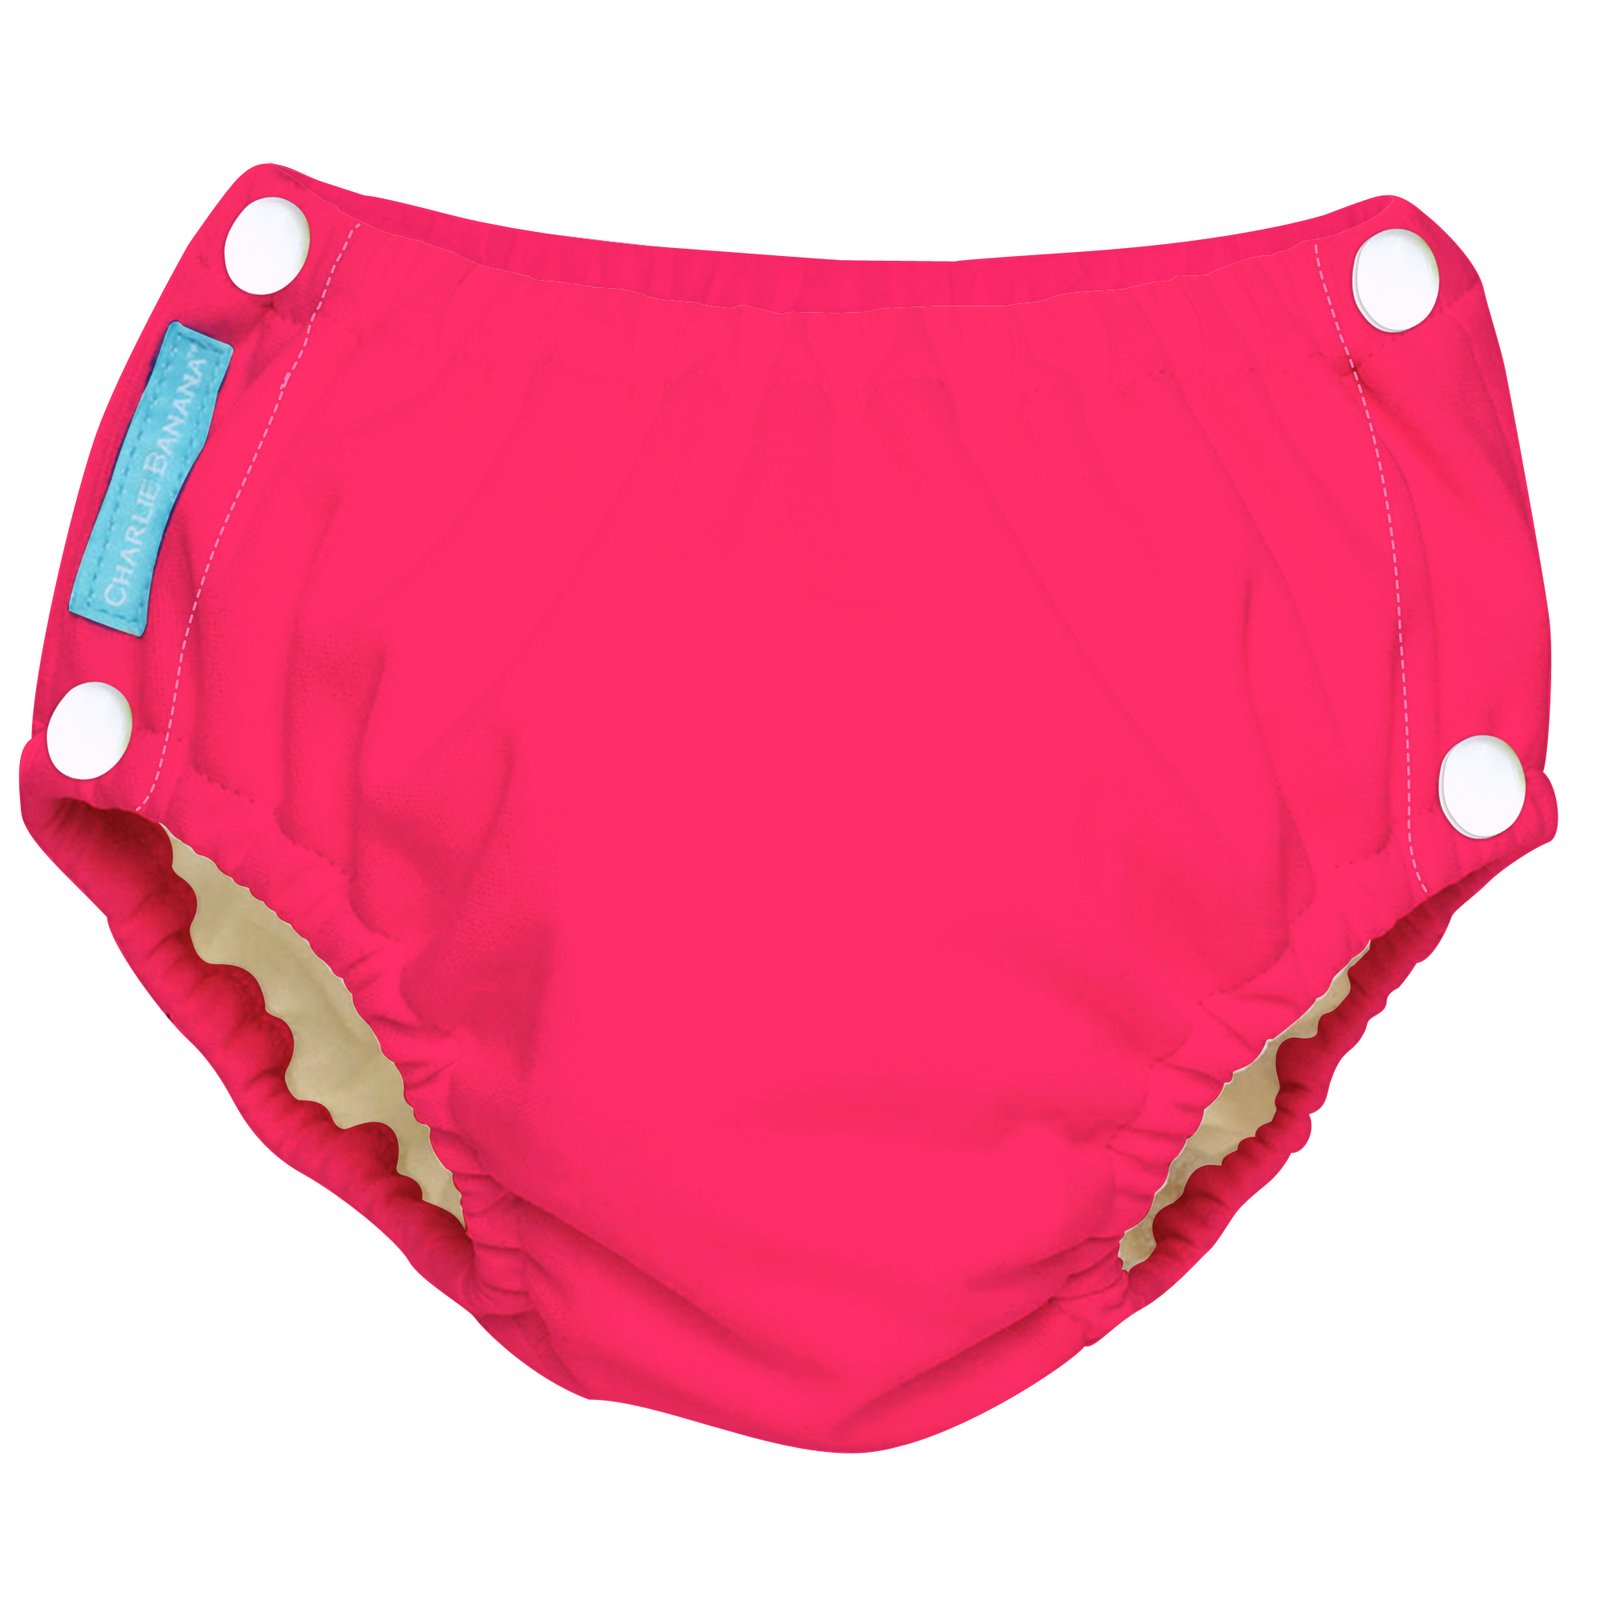 Swim-Diaper_Fluorescent-Hot-Pink_with-snaps.jpg